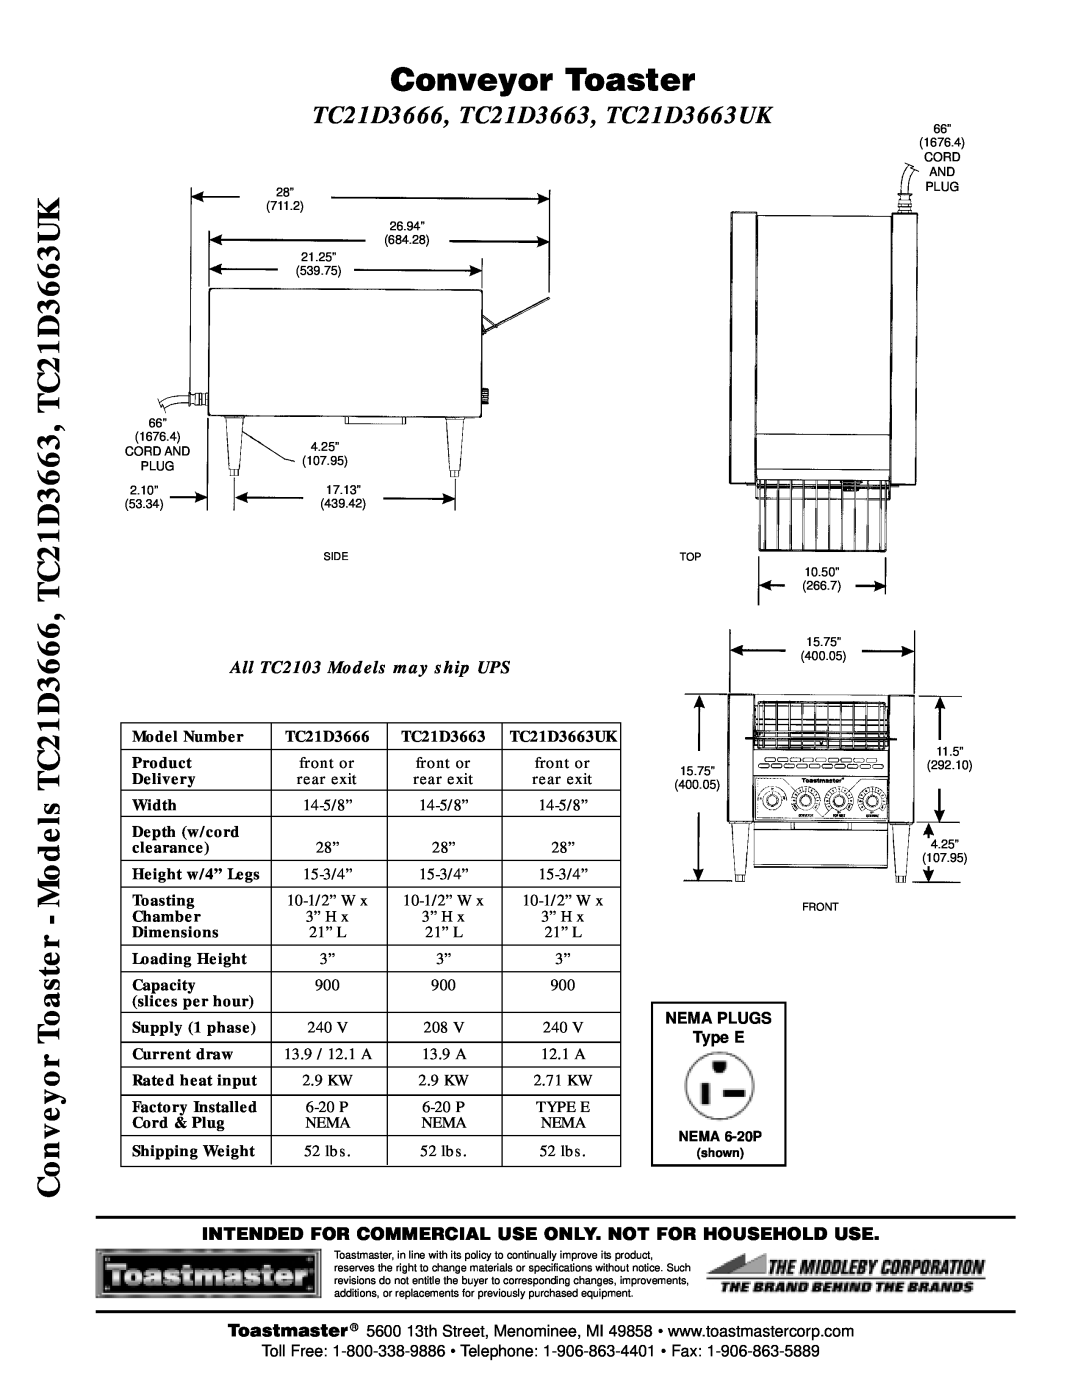 Toastmaster Conveyor Toaster - Models, TC21D3666, TC21D3663, TC21D3663UK, All TC2103 Models may ship UPS 